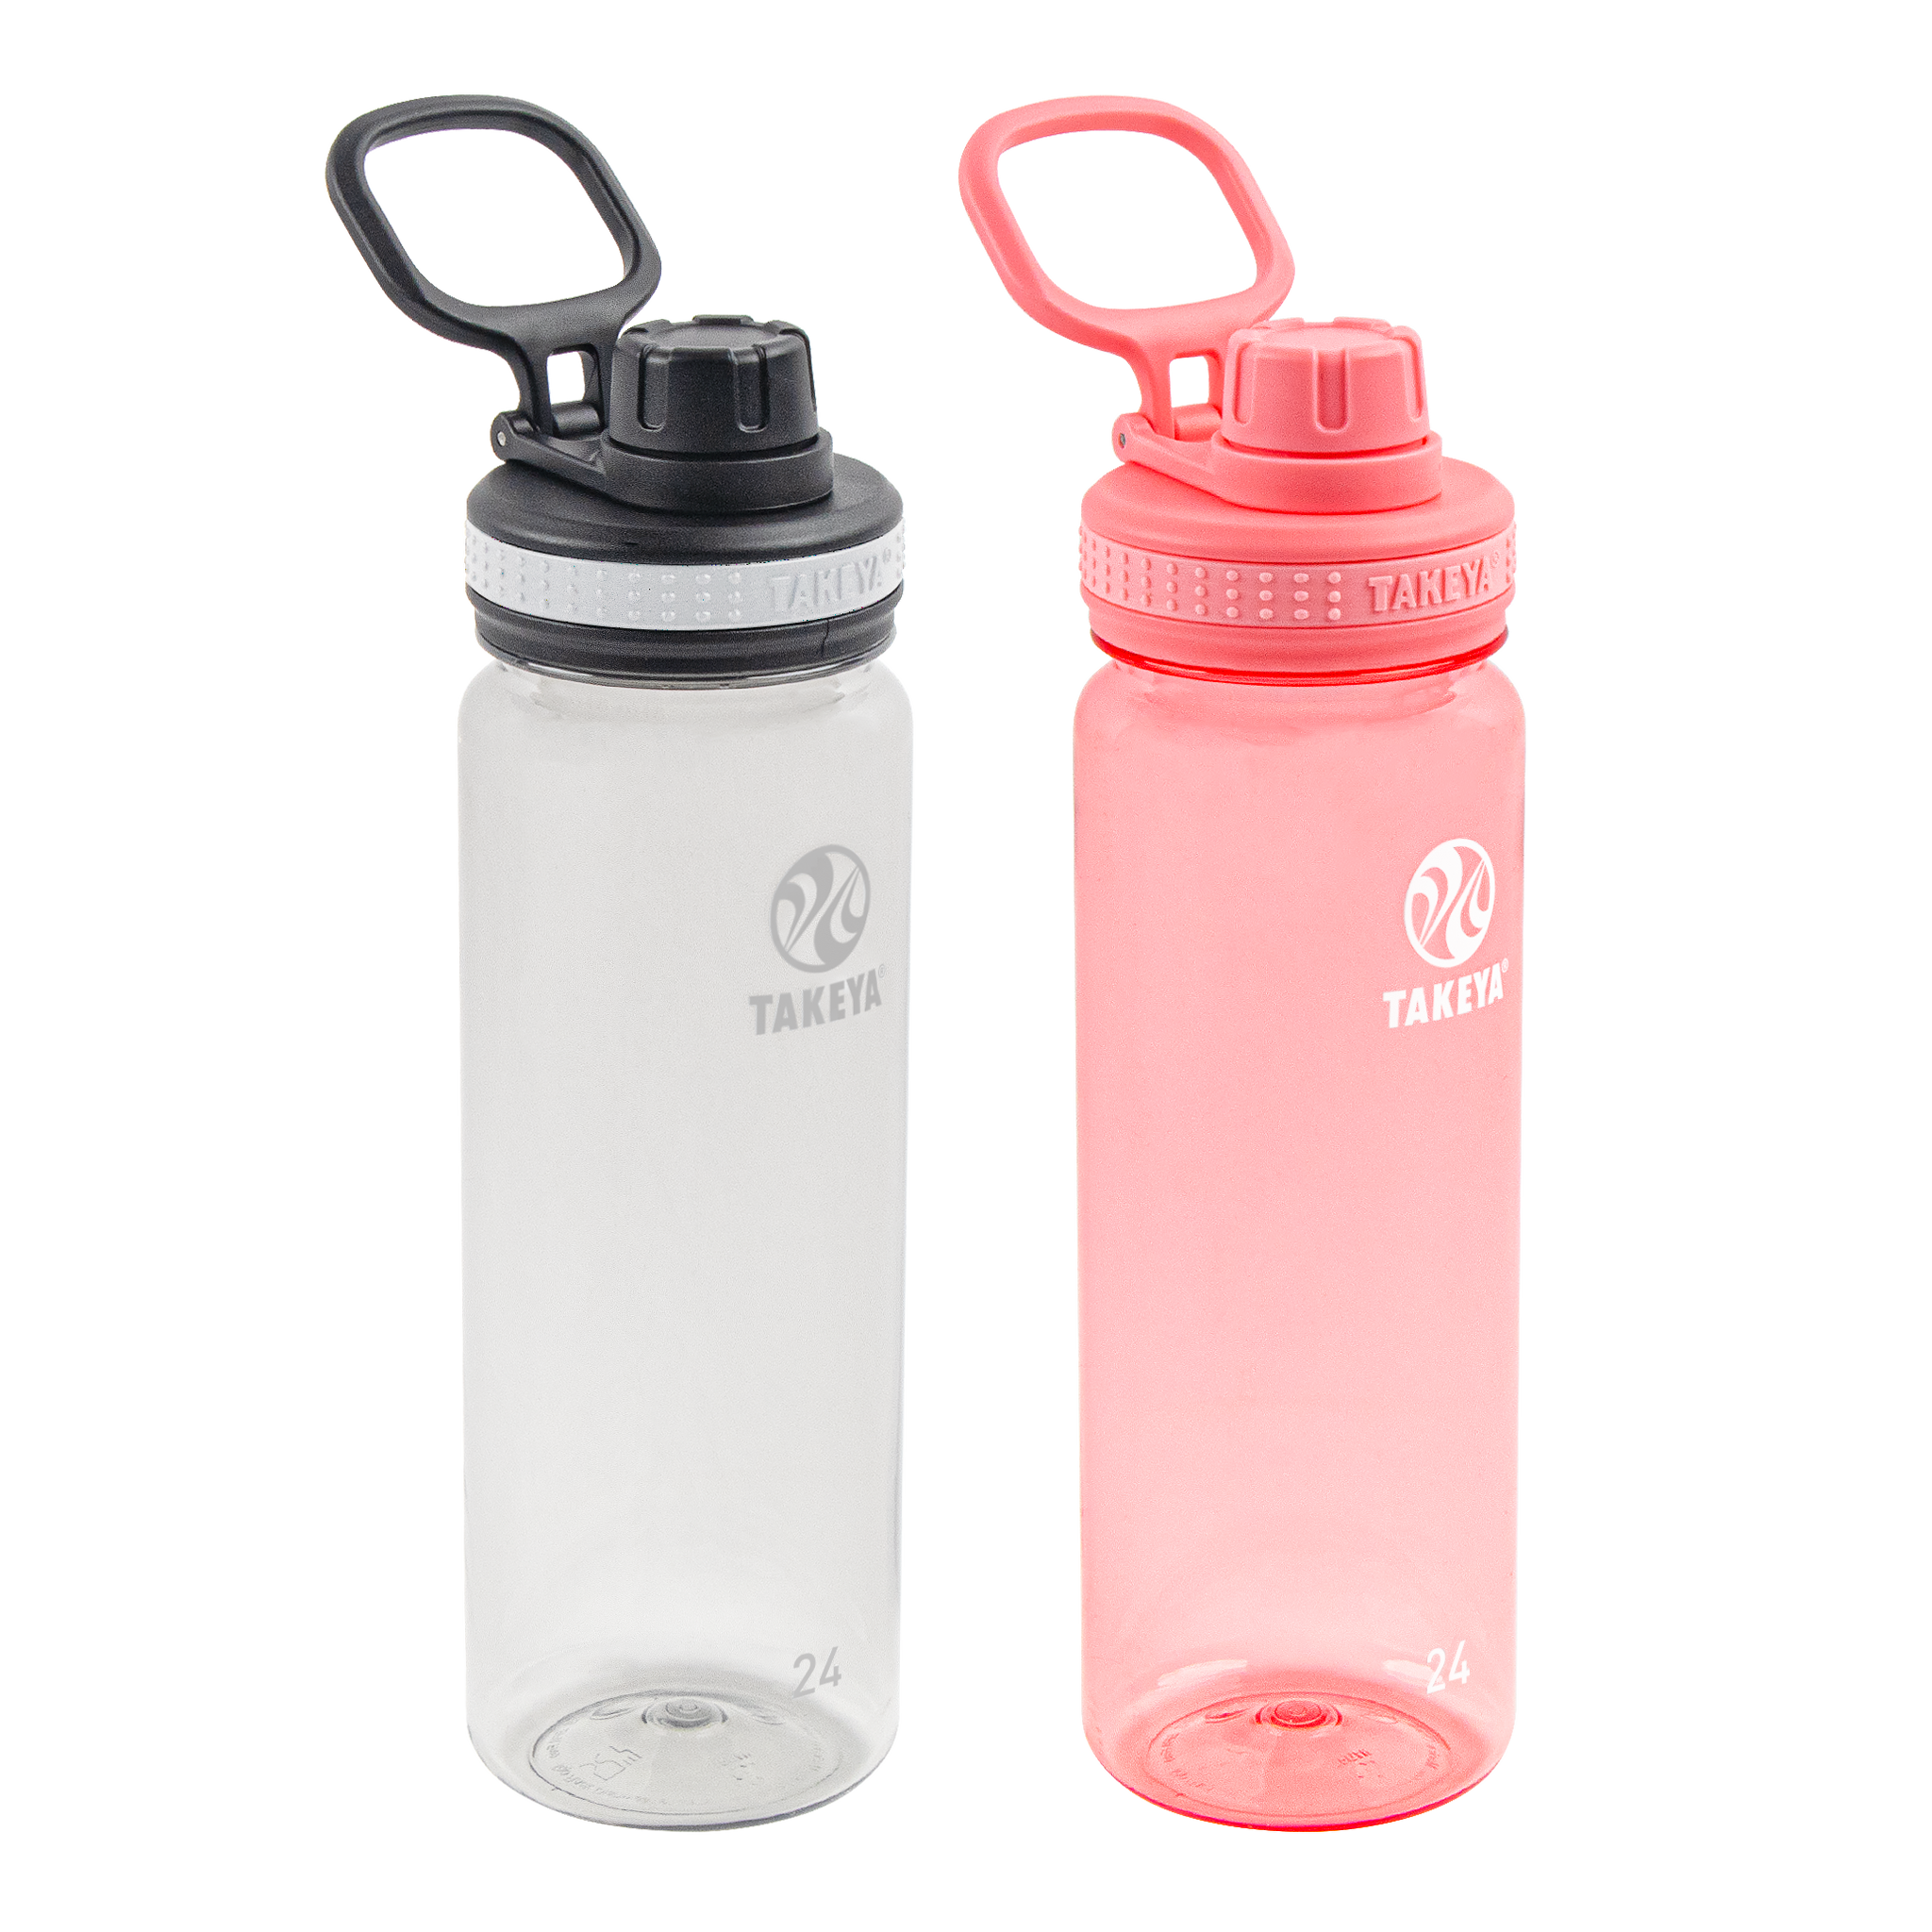 Takeya® Full Color Tritan Water Bottle w/ Spout Lid - 24 oz.